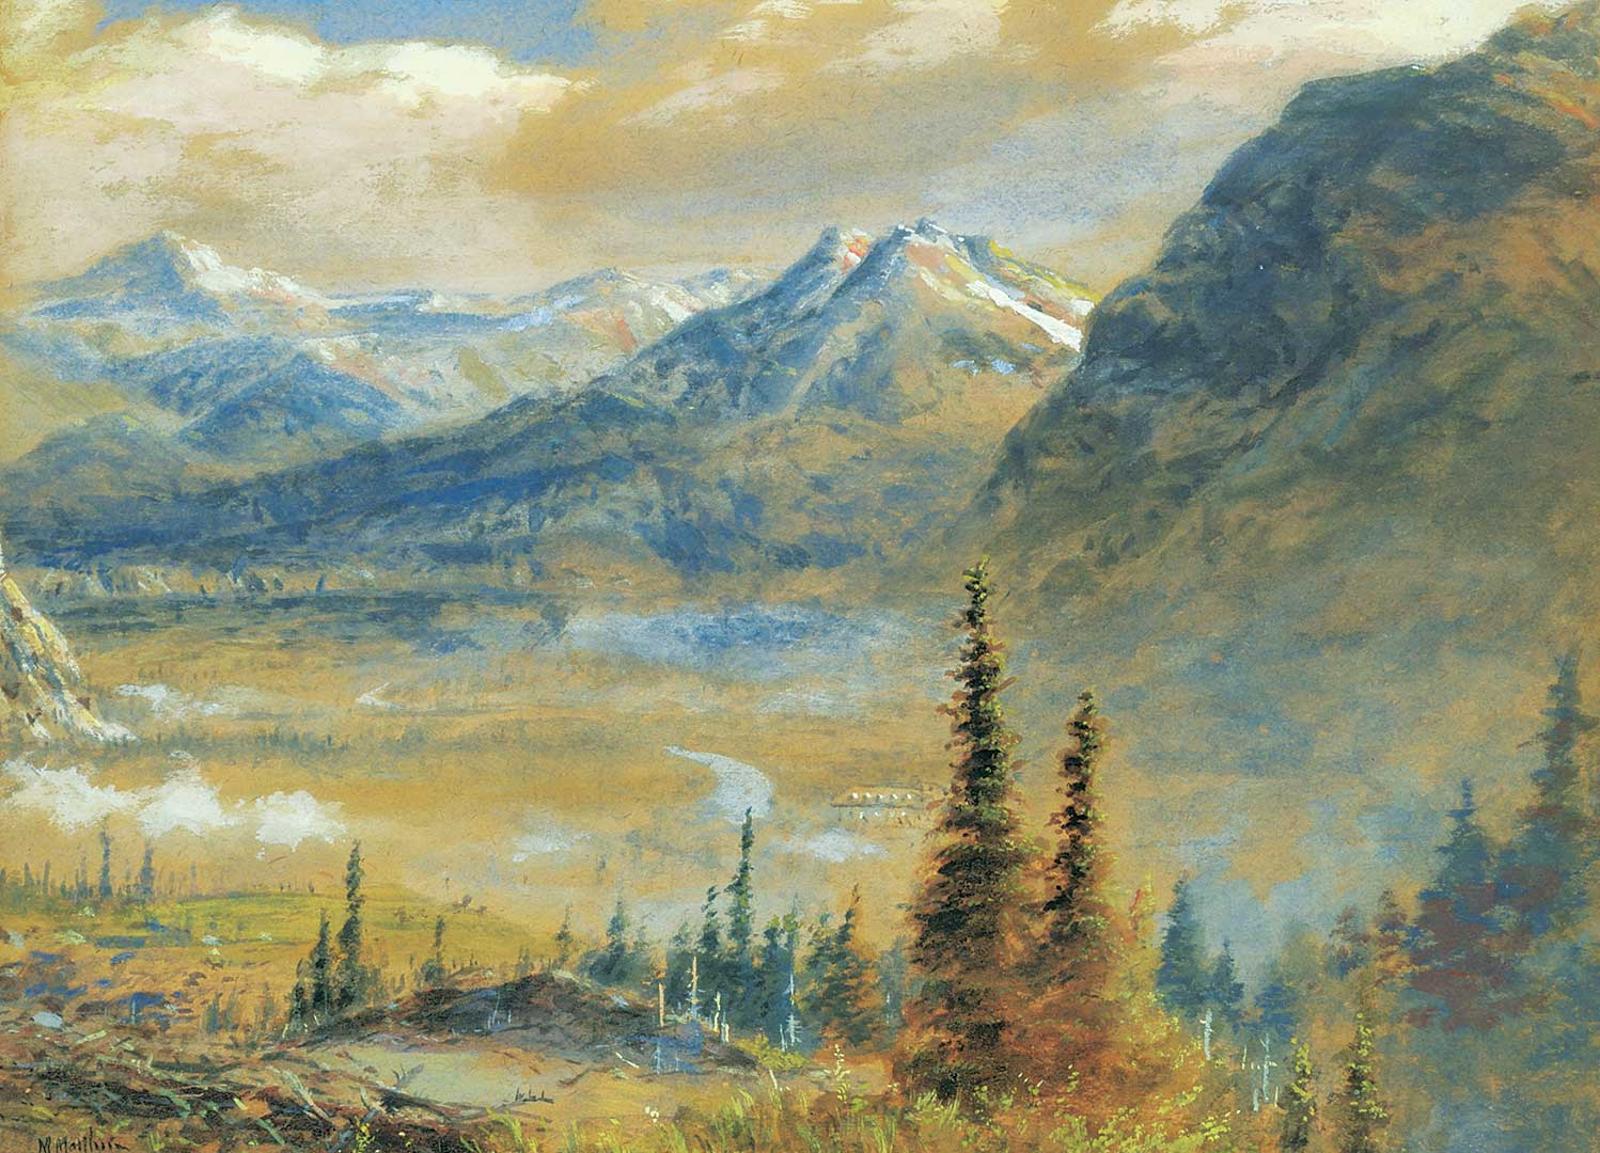 Marmaduke Matthews (1837-1913) - A Misty Morning at Banff, Alberta